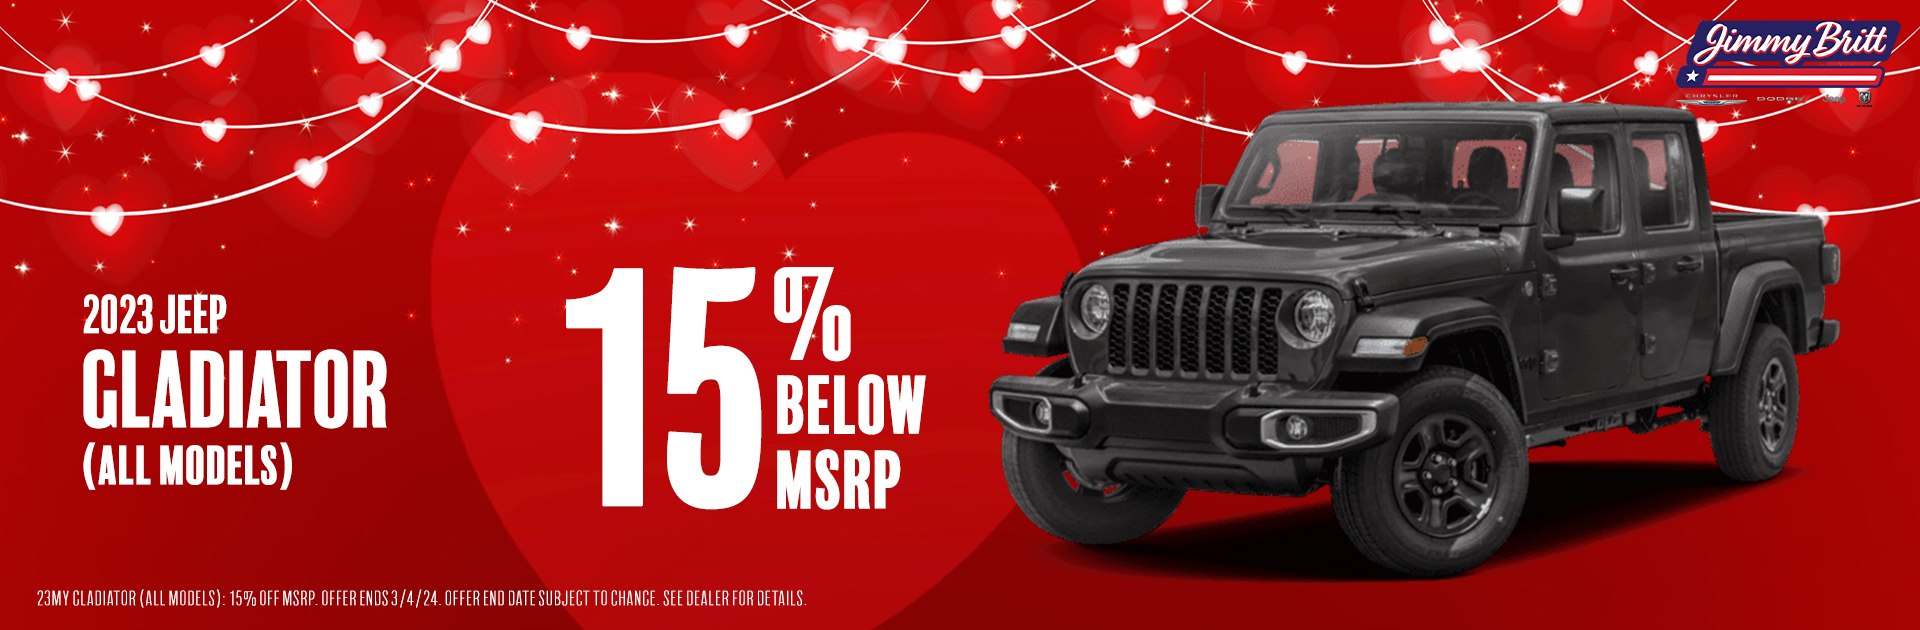 2023 Jeep Gladiator: 15% Below MSRP!